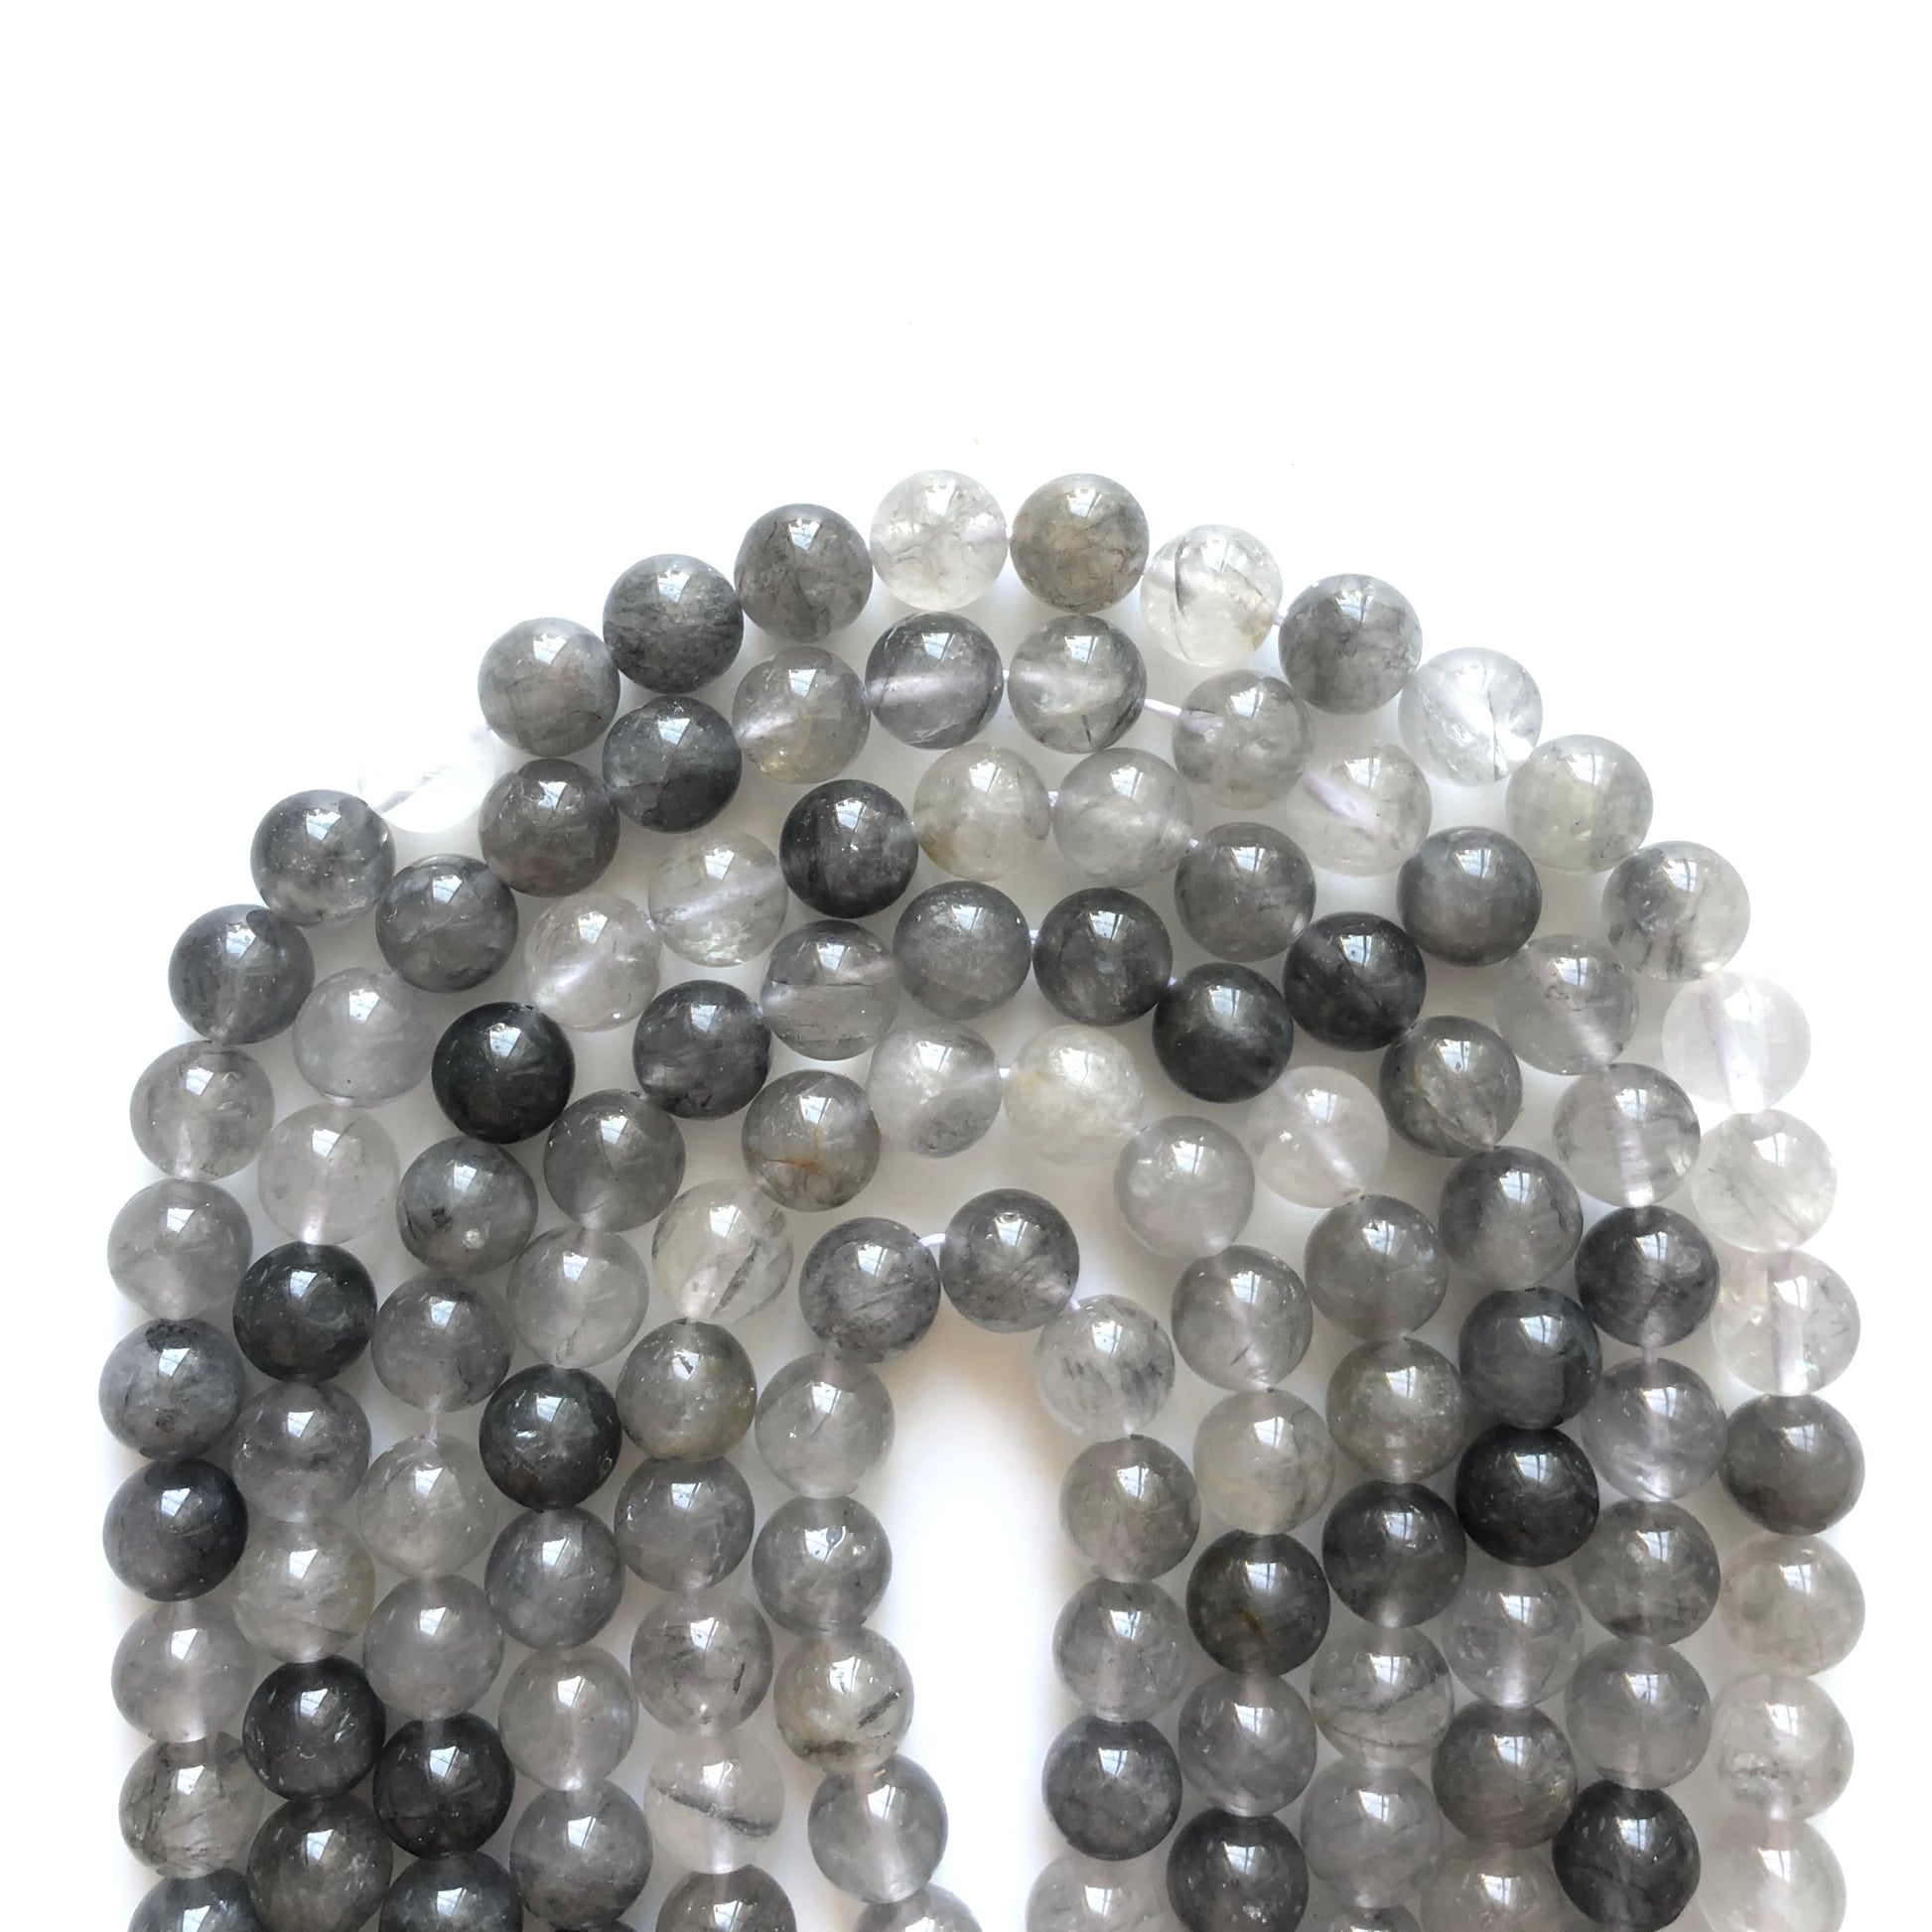 2 Strands/lot 10mm Silver Ghost Quartz Round Stone Beads Stone Beads Other Stone Beads Charms Beads Beyond